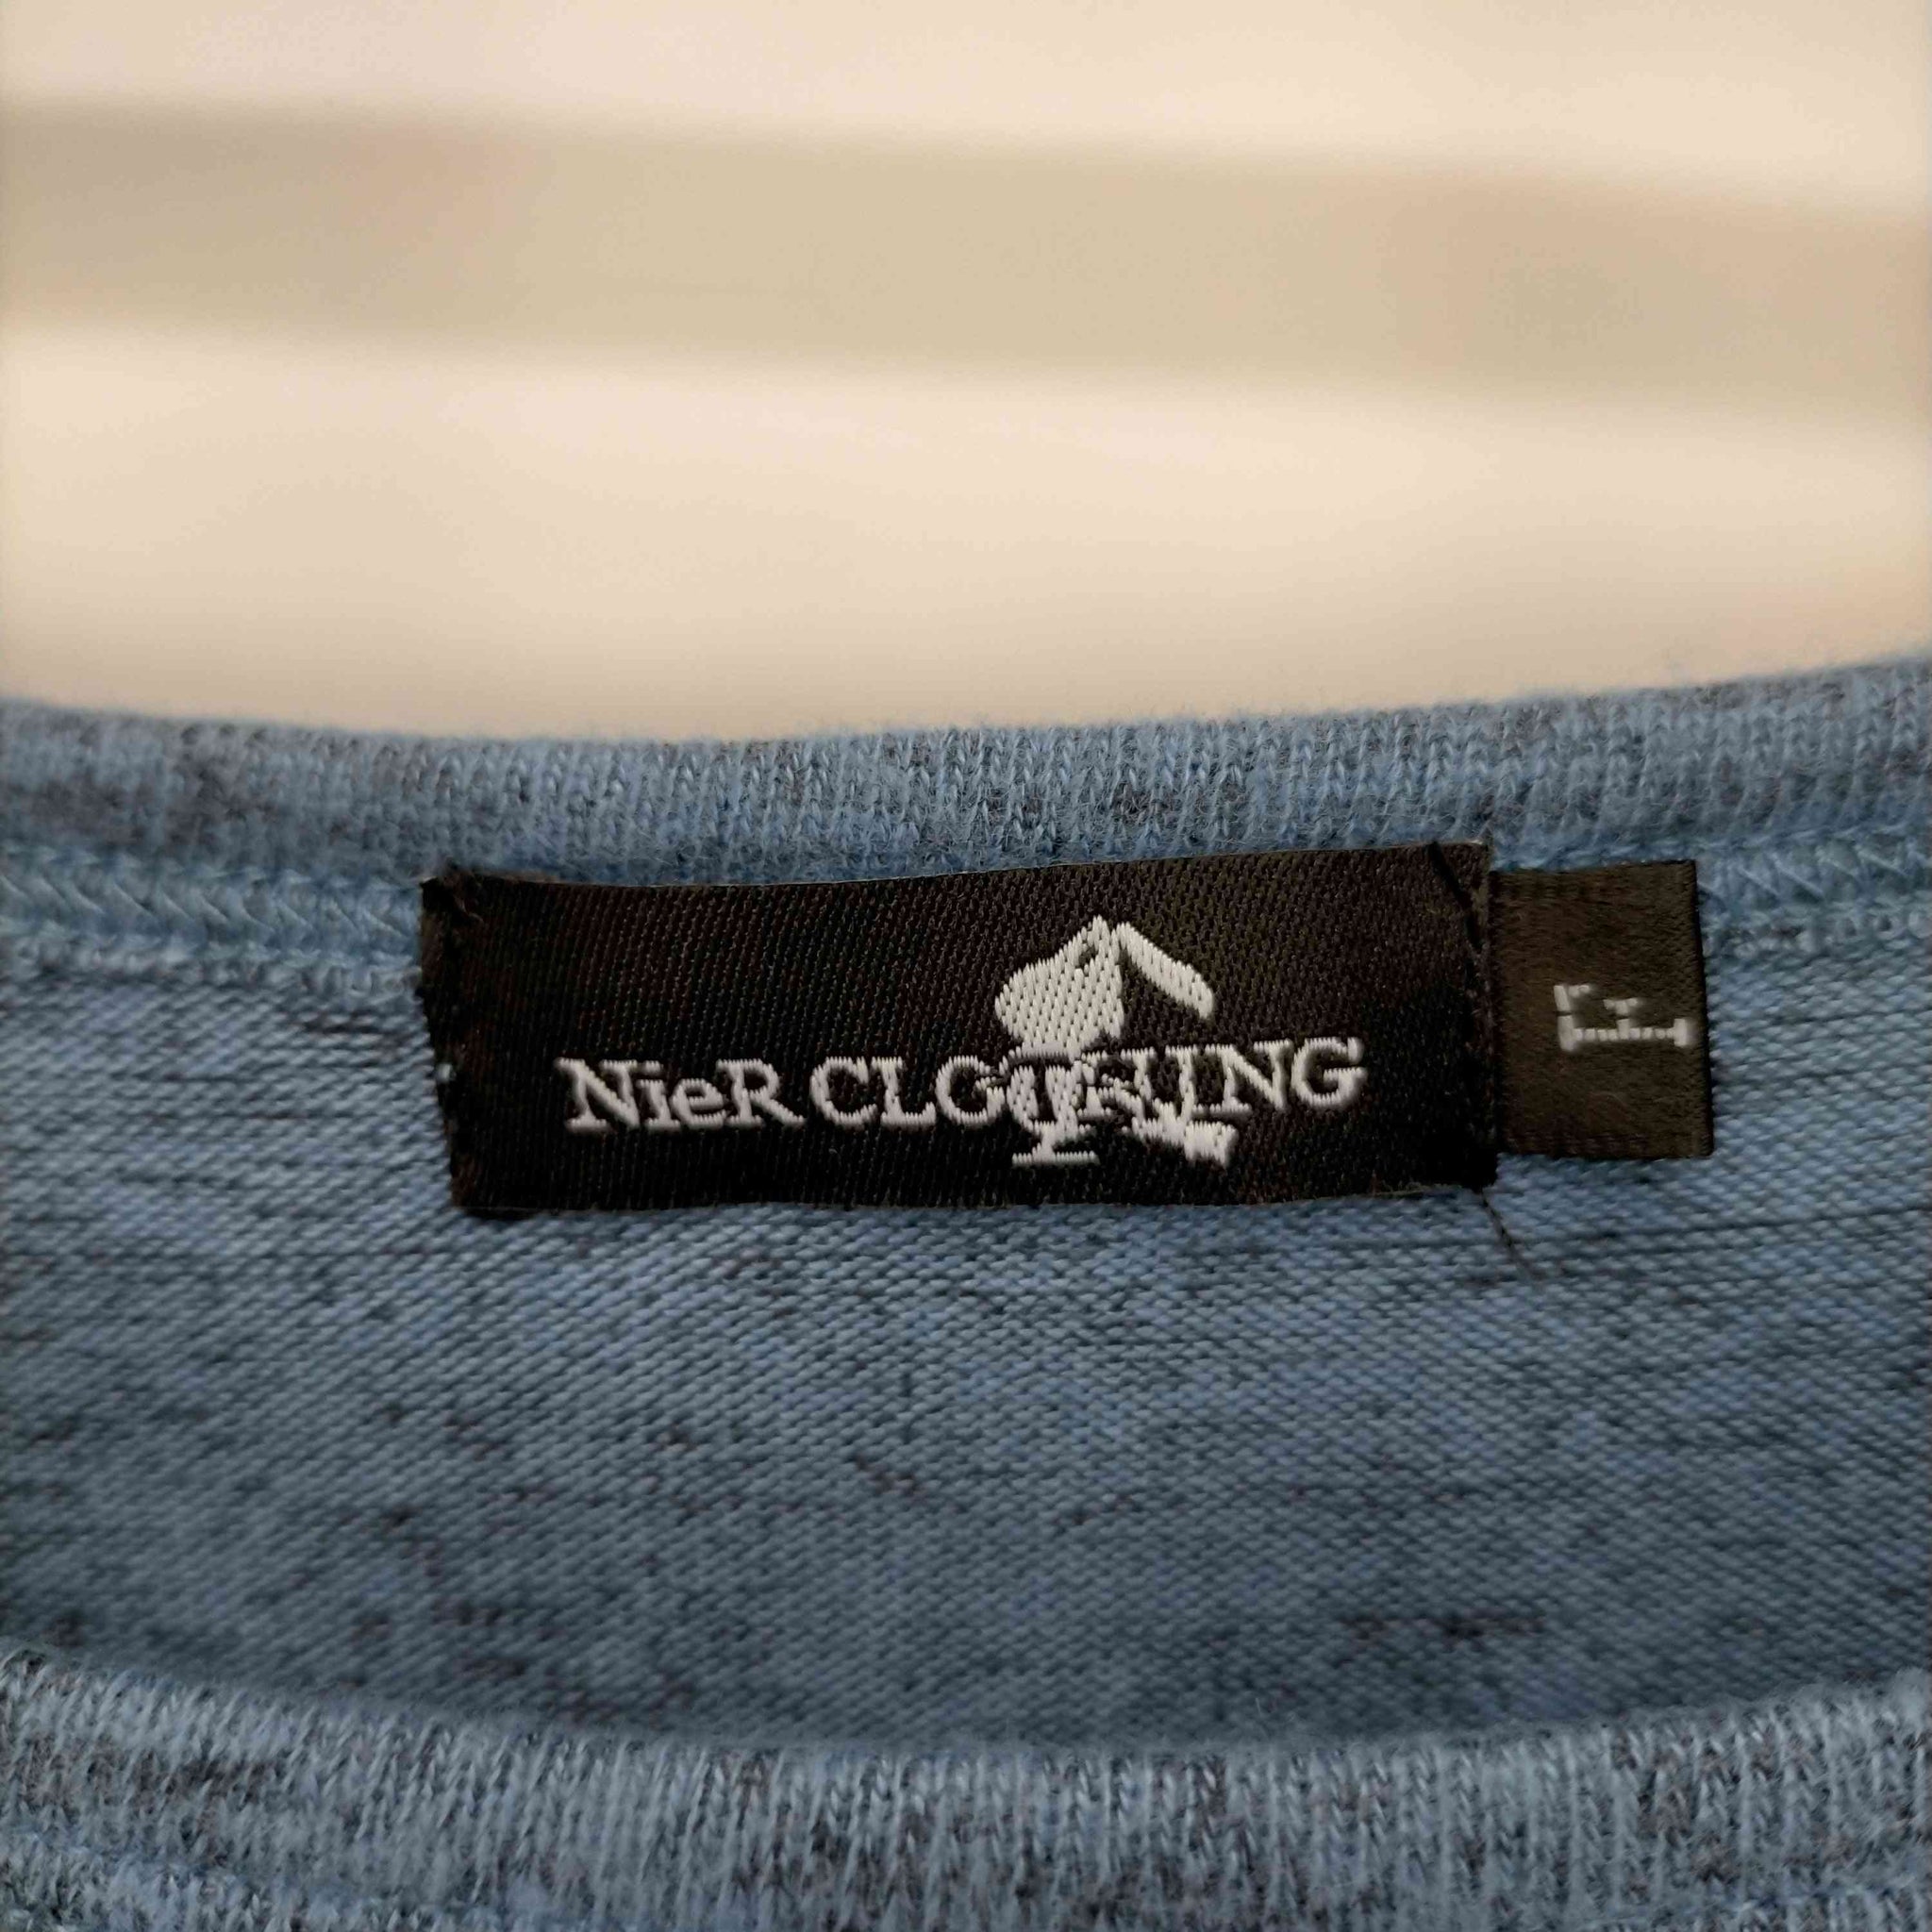 NieR CLOTHING(ニーア クロージング)ボックスロゴフロントポケットワンピース